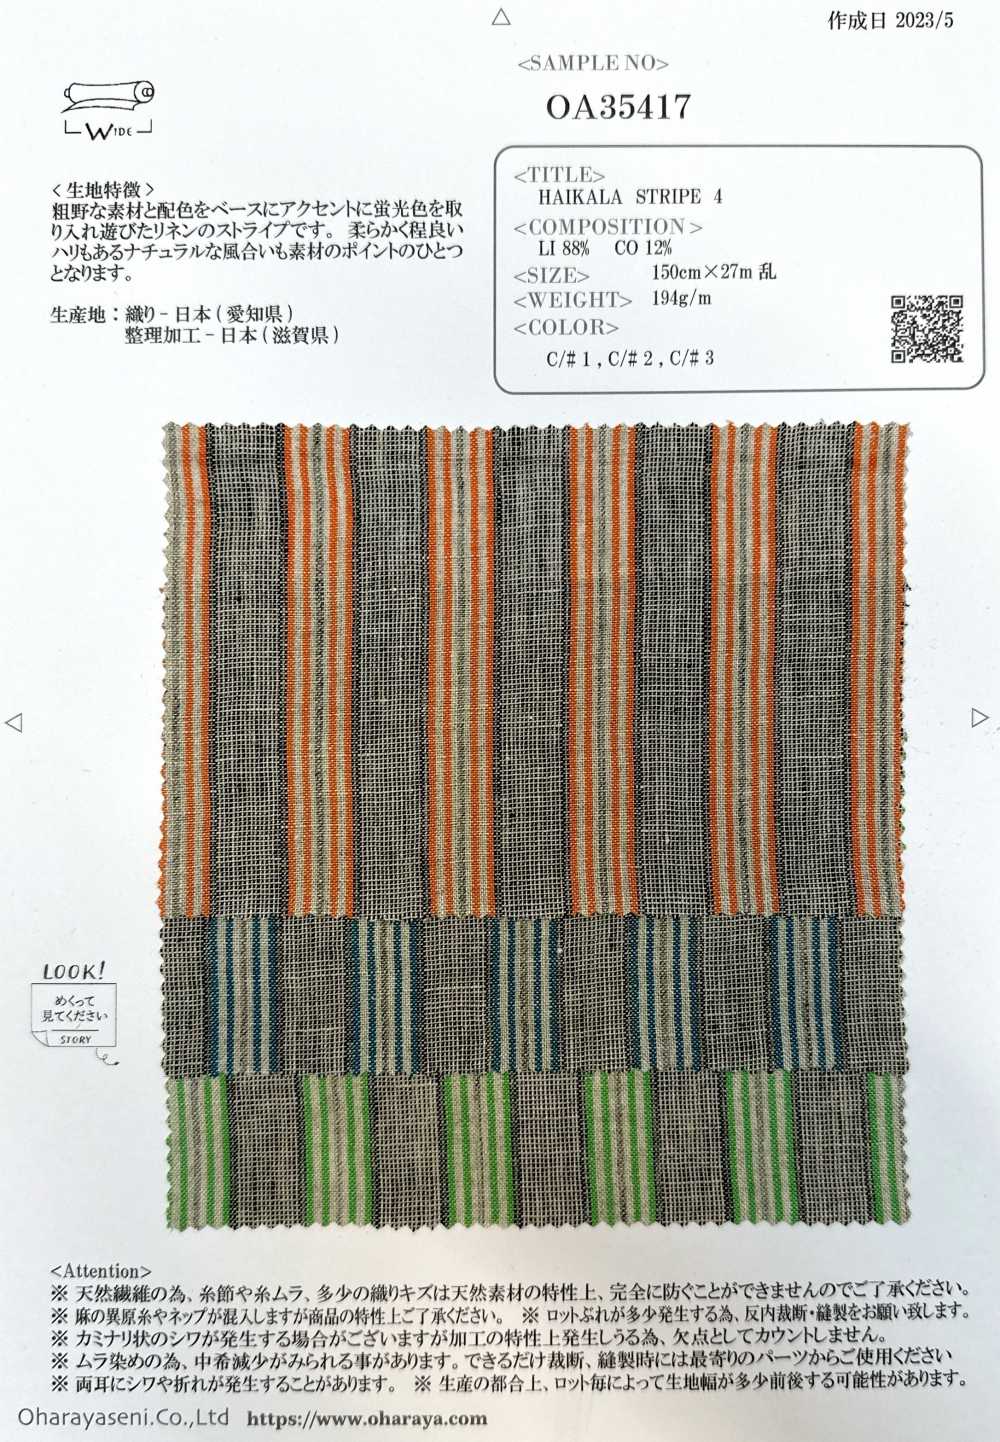 OA35417 HAIKARA STRIPE 4[Textile / Fabric] Oharayaseni